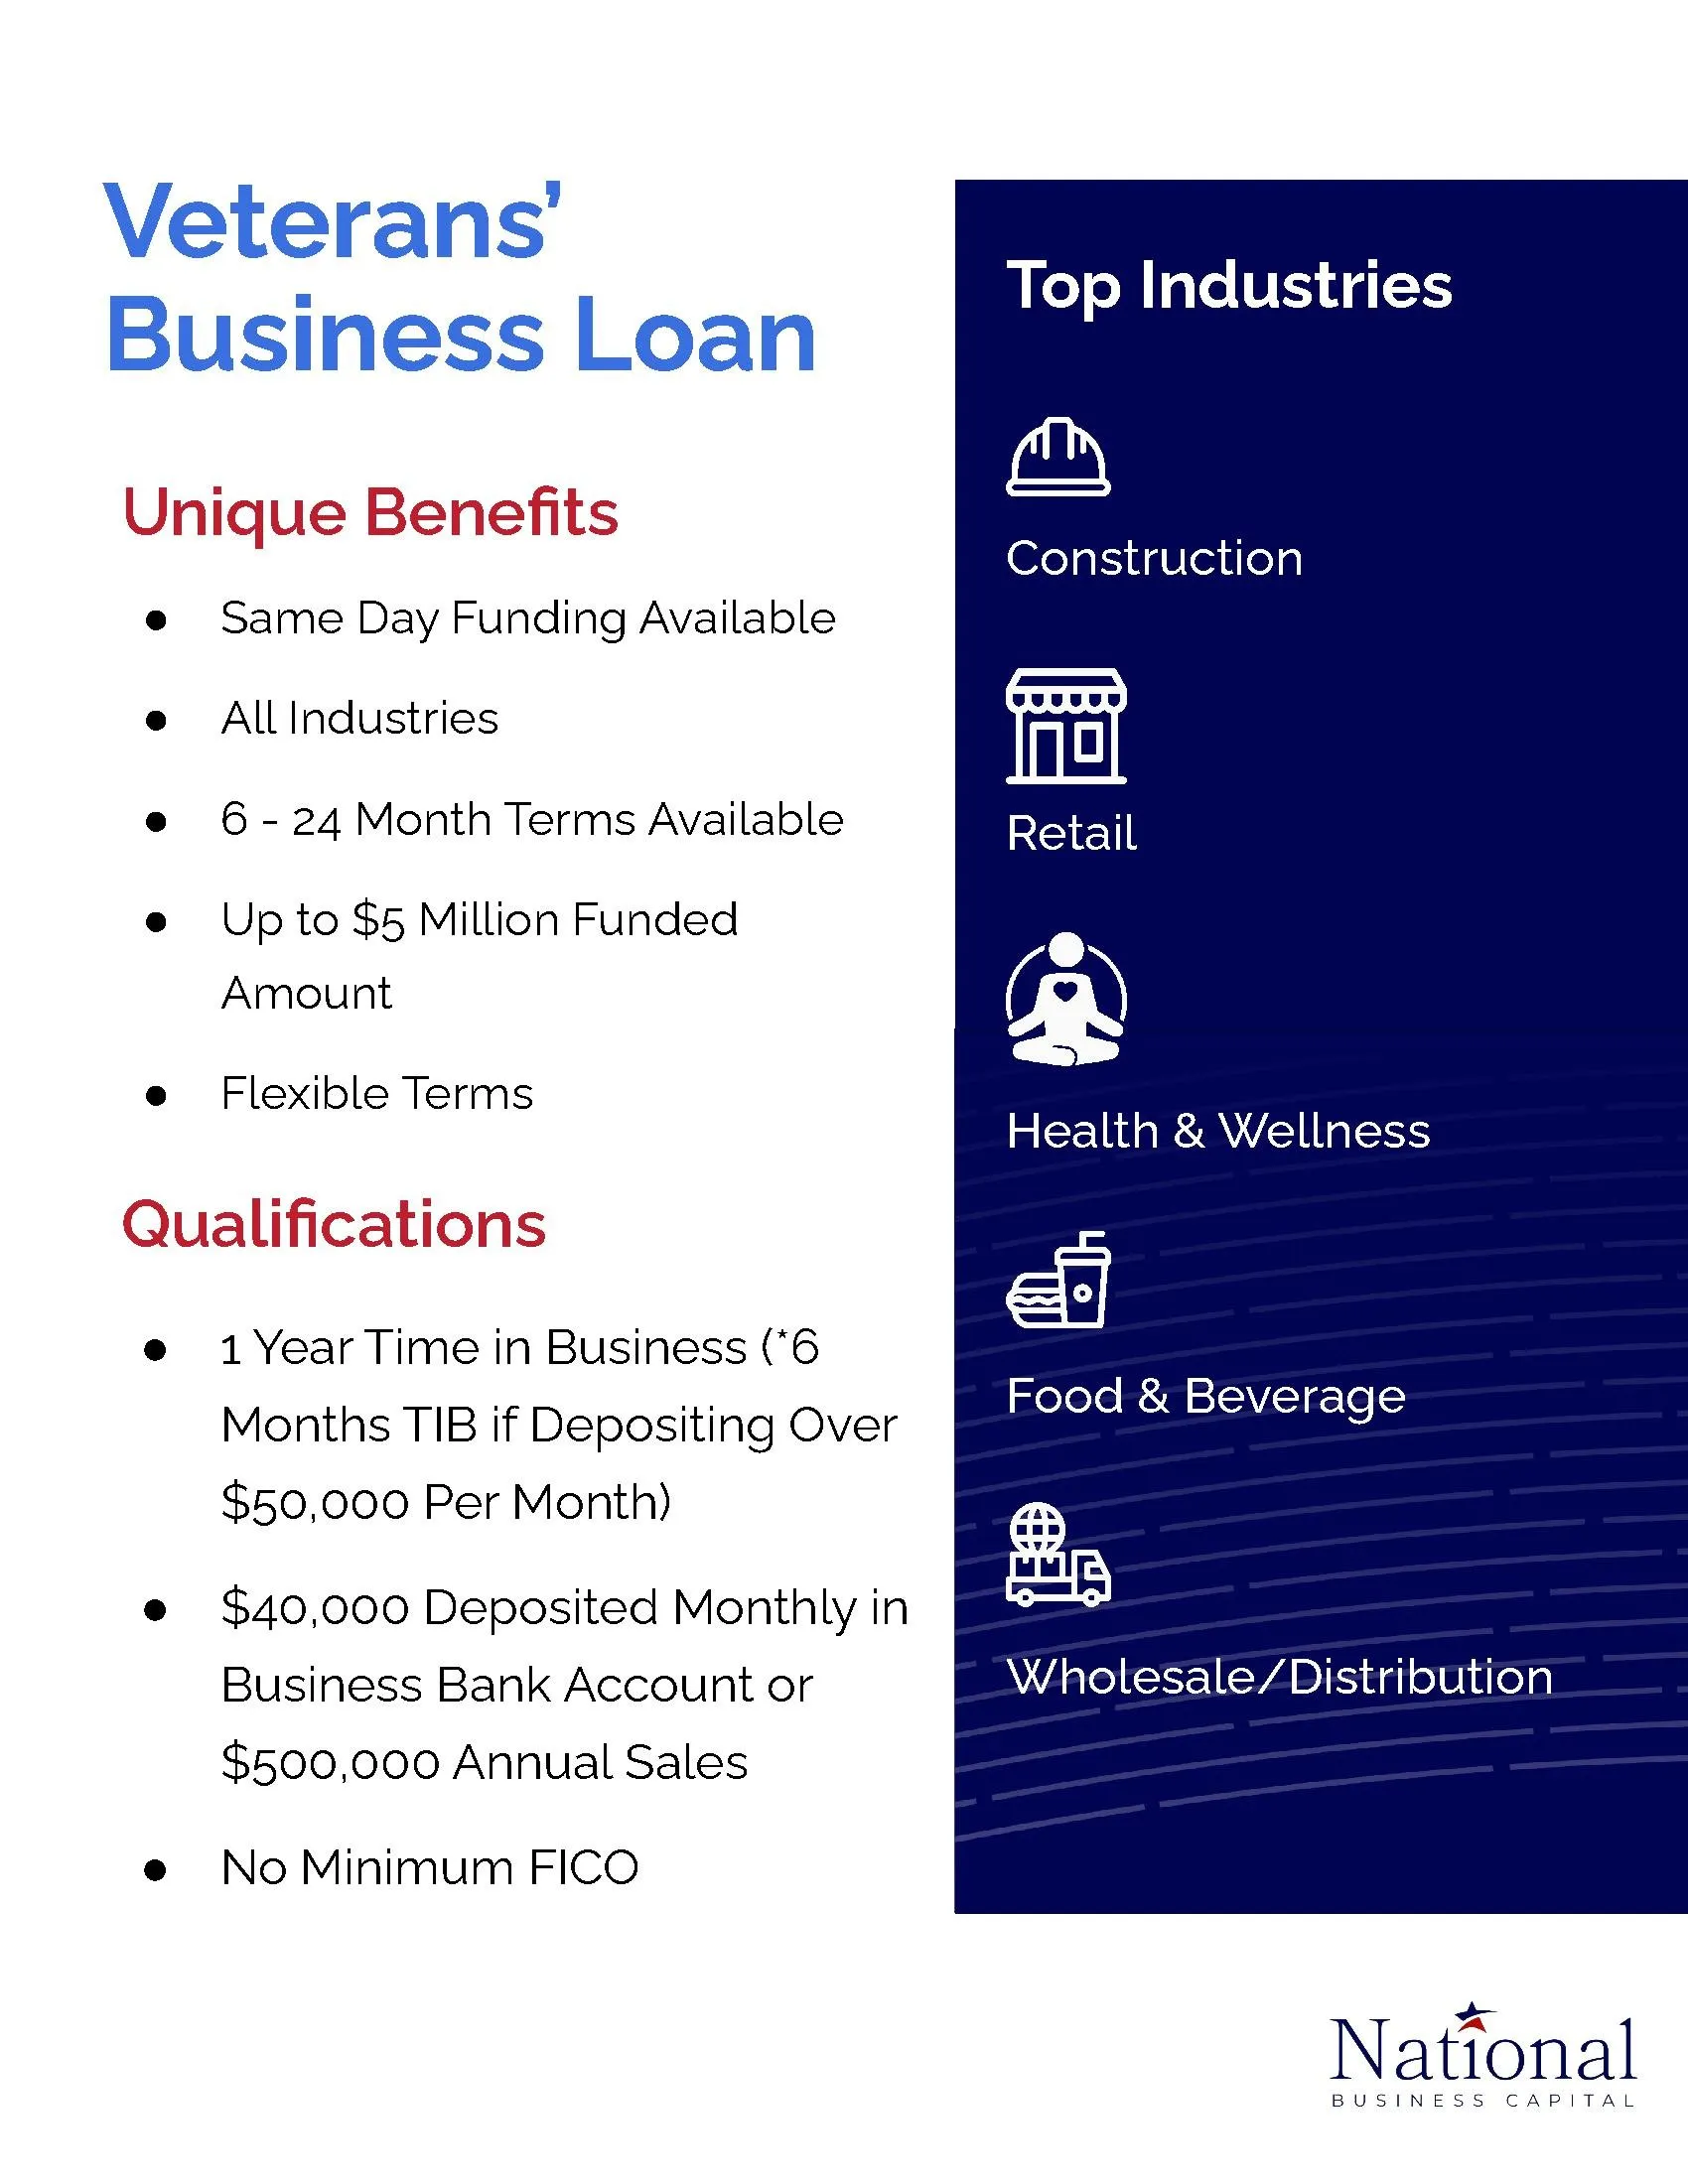 Veteran's business loan